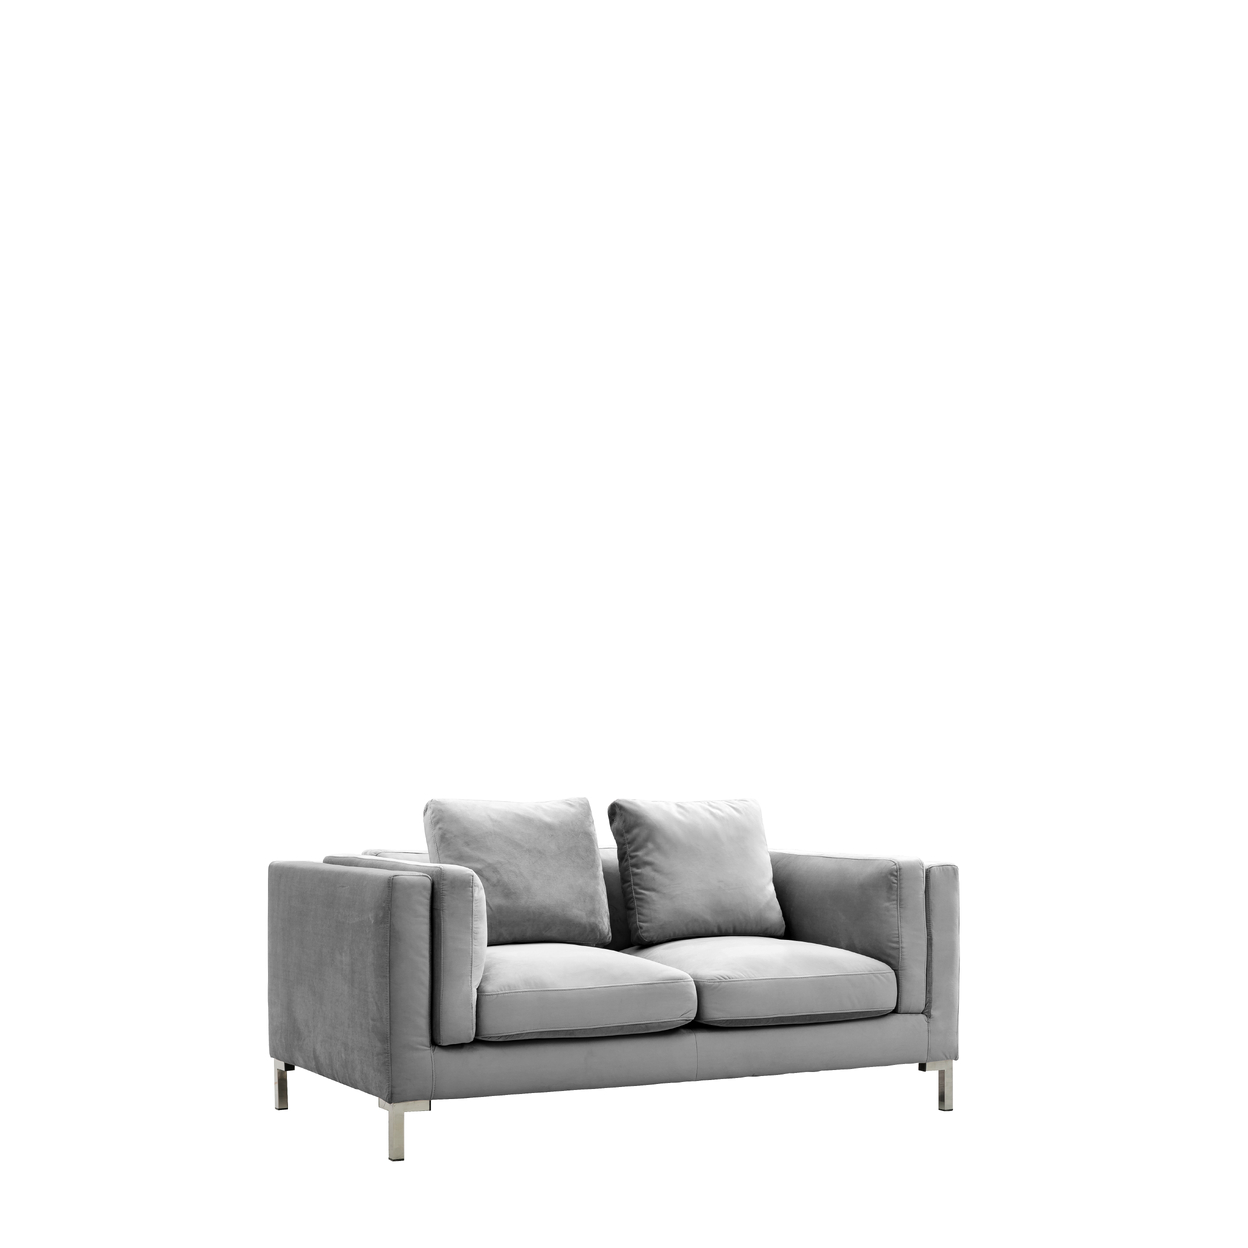 Iconic Home Everlie Loveseat Velvet Upholstered Multi-Cushion Seat Loose Back Shelter Arm Design Silver Tone Metal Y-Legs - Blue